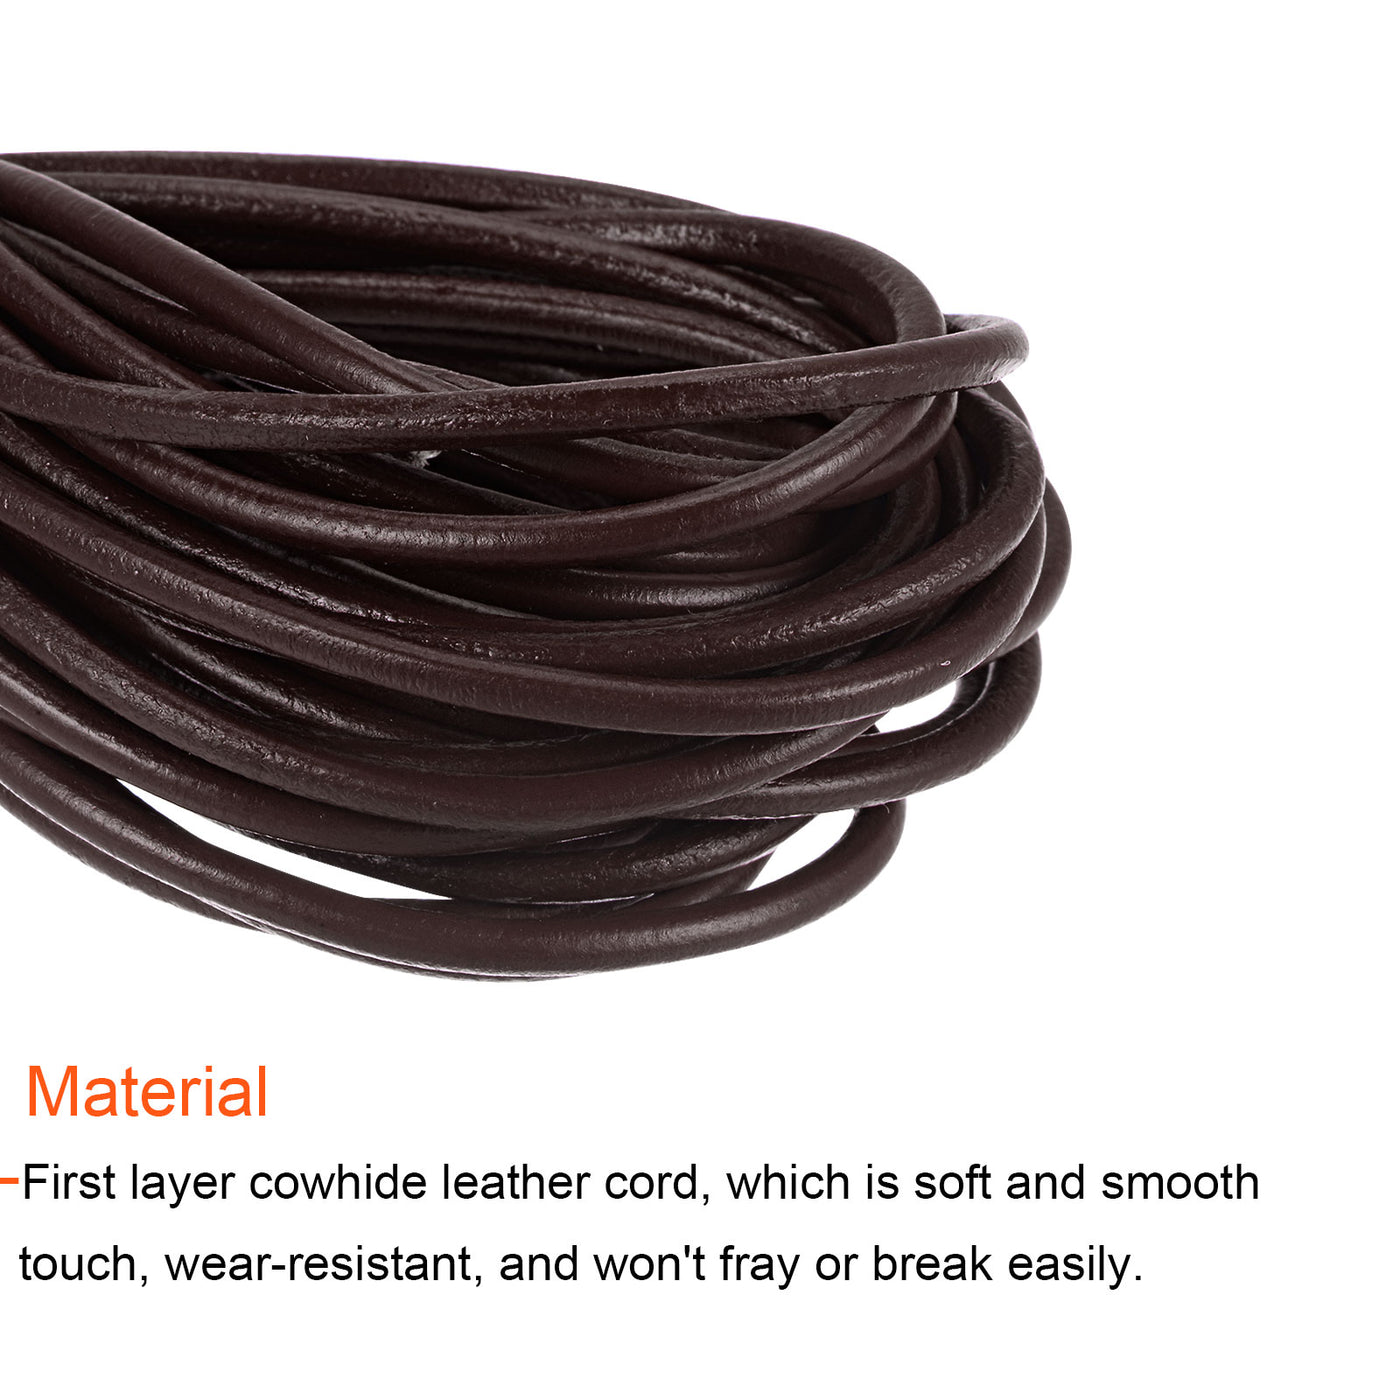 Harfington 3mm Round Leather Lacing Cord 11Yards/10M Crafting Braiding String, Coffee